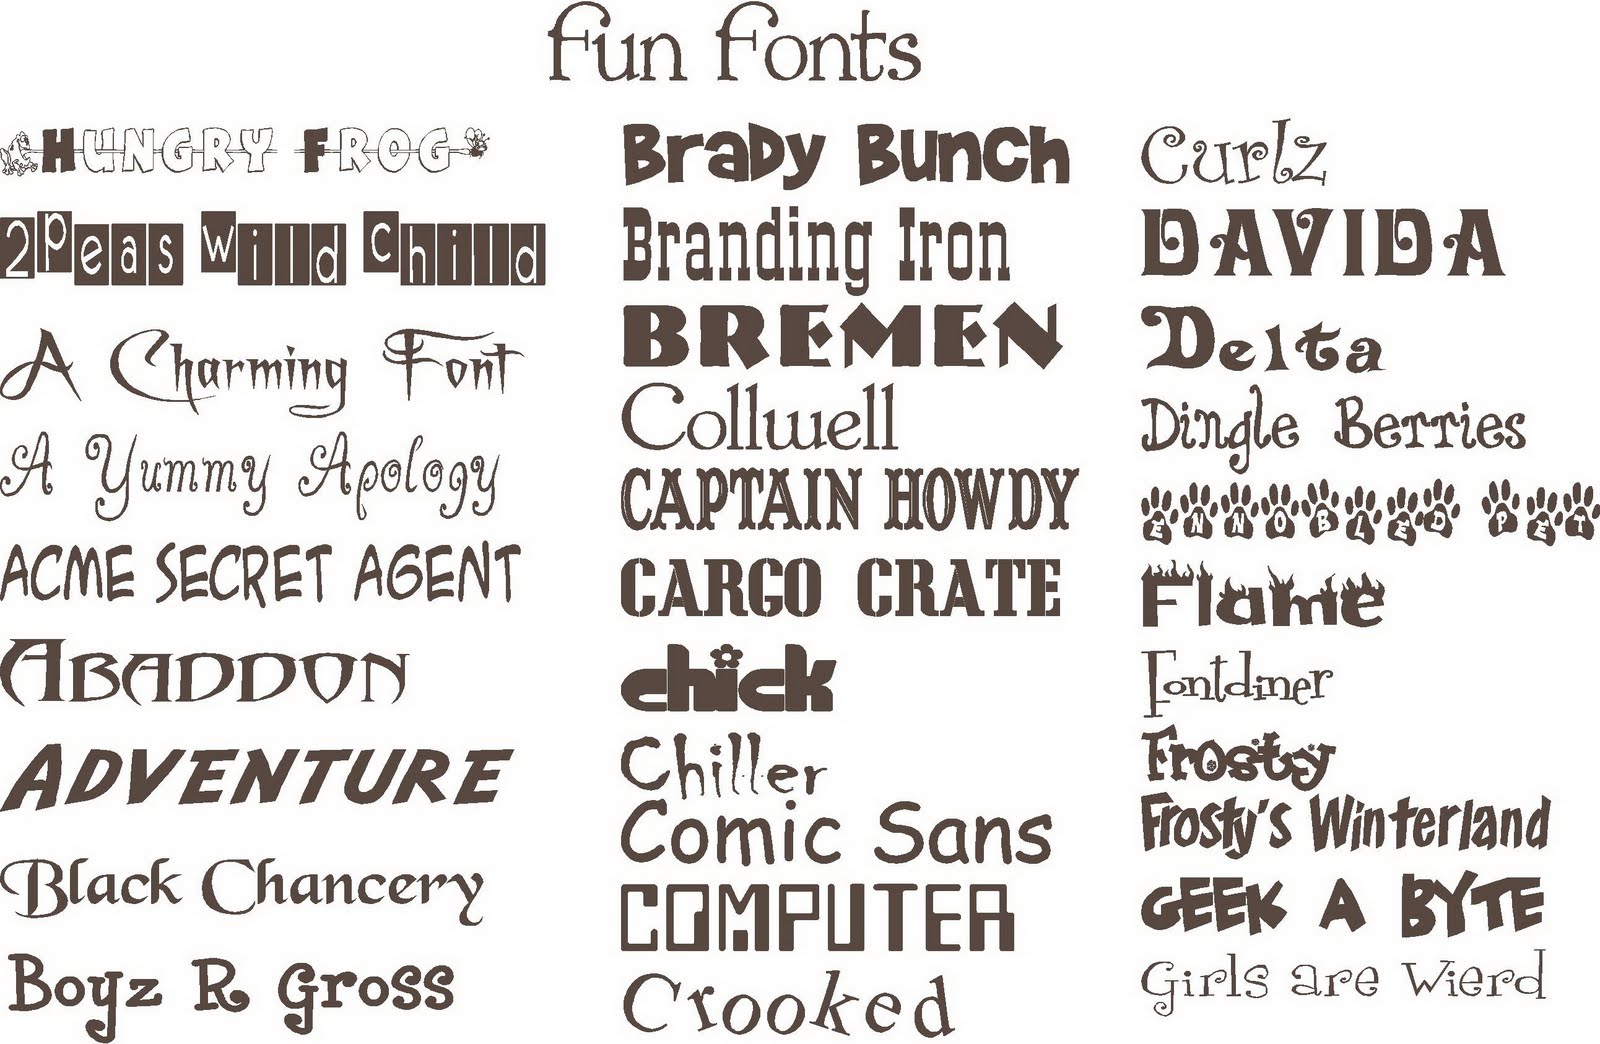 Simply Beautiful: Fun Fonts